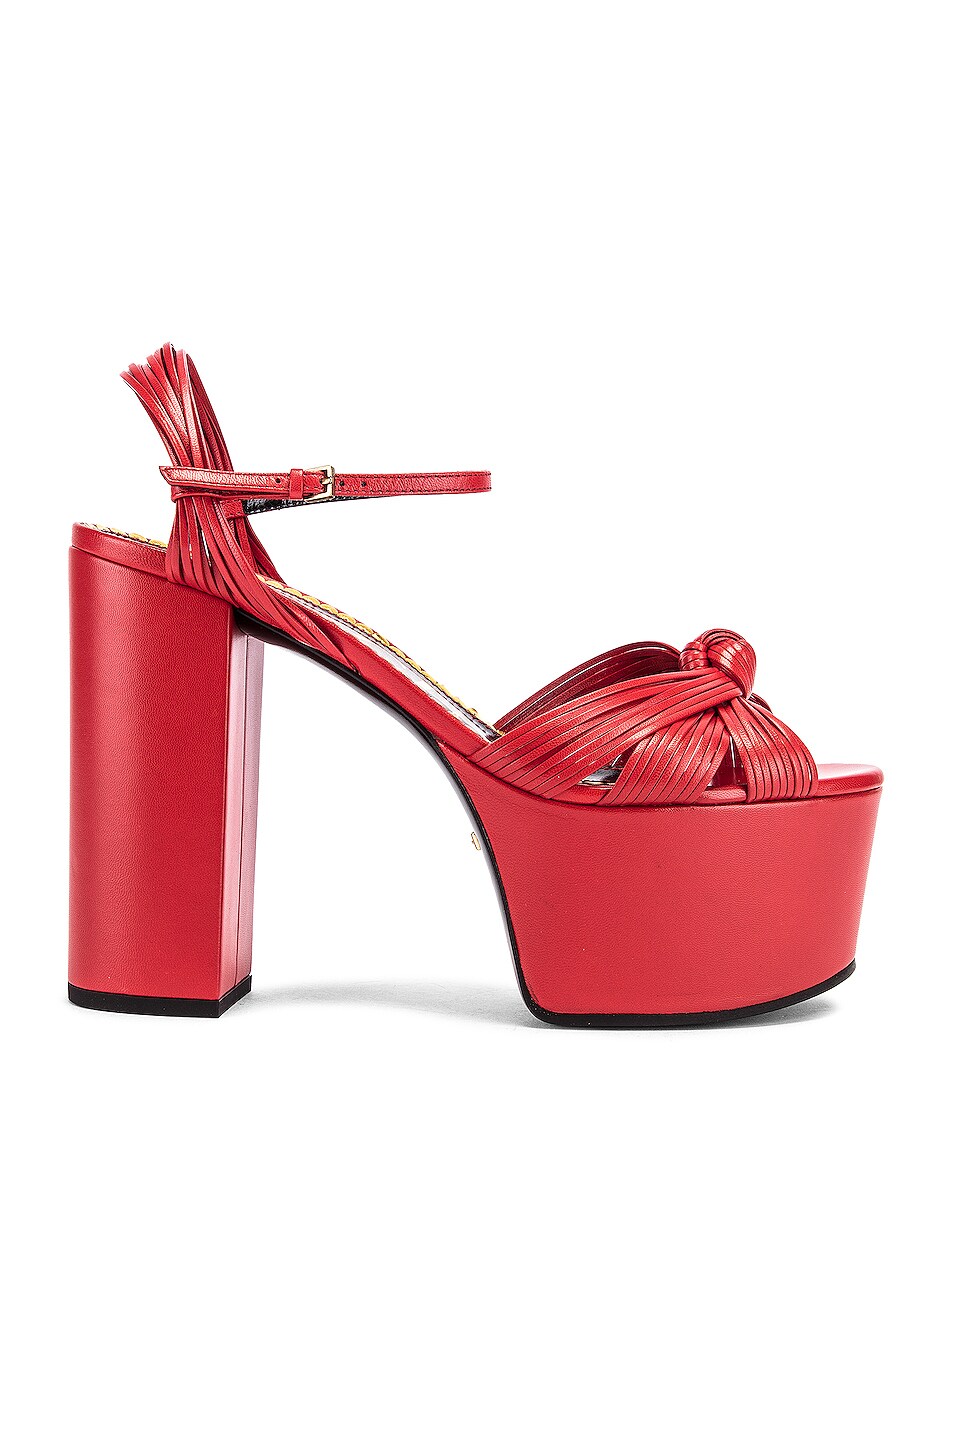 Gucci Crawford Platform Sandals in Heron Red | FWRD